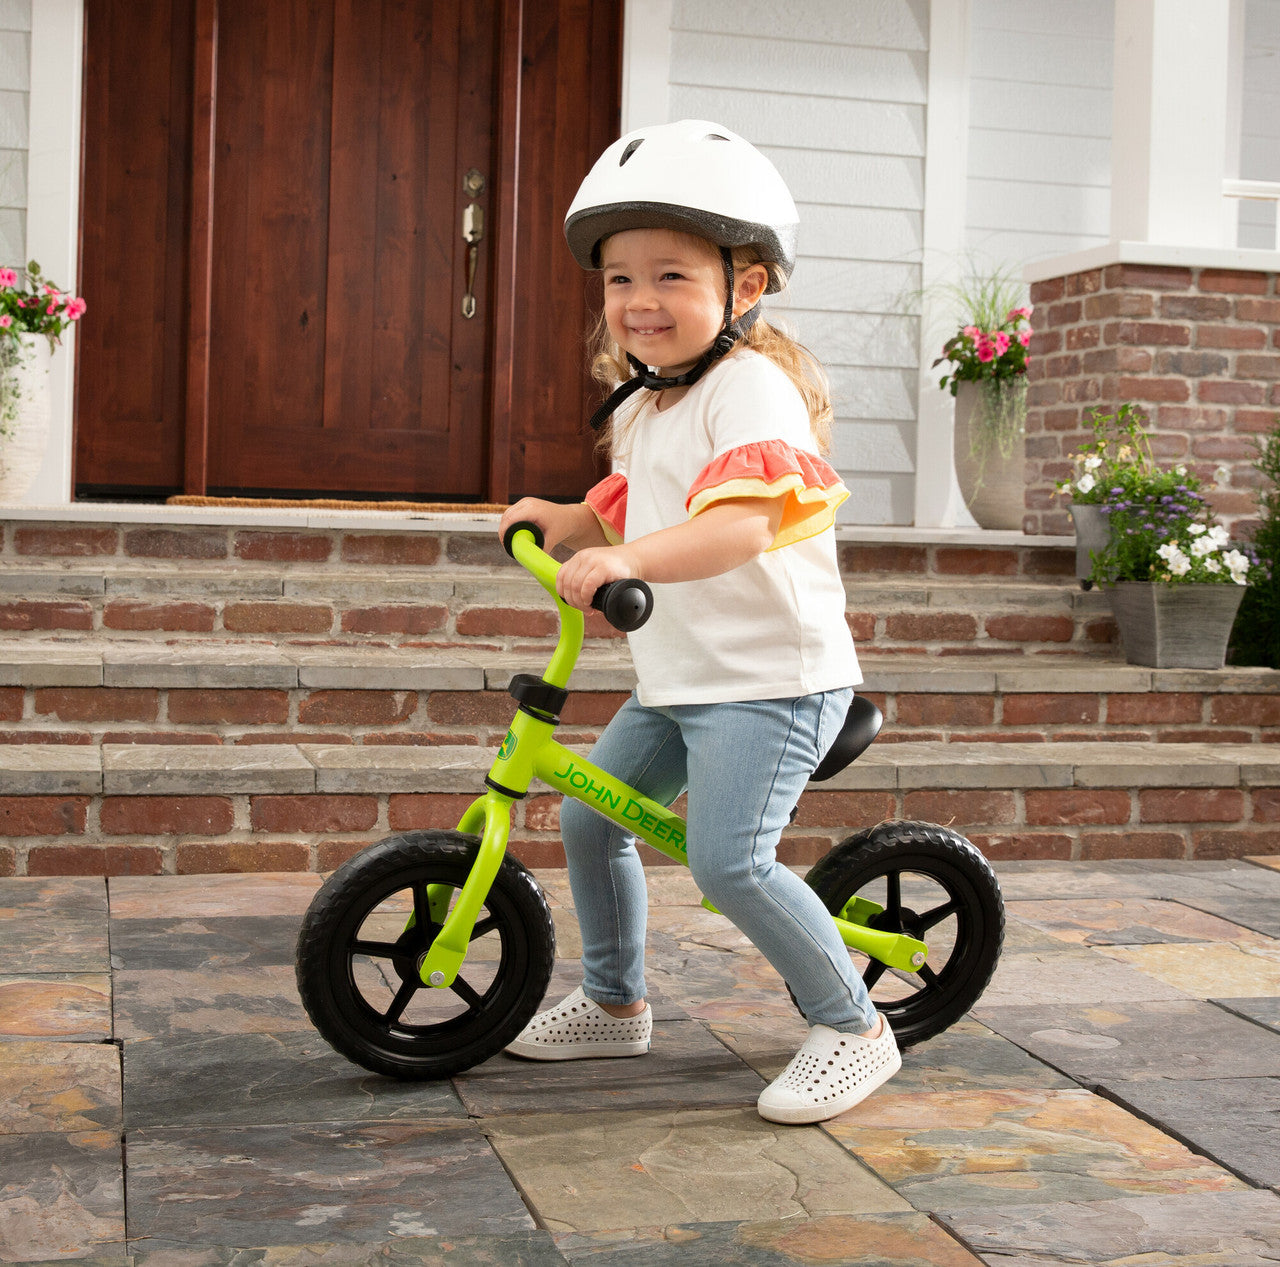 John Deere 10" Toddler Balance Bike